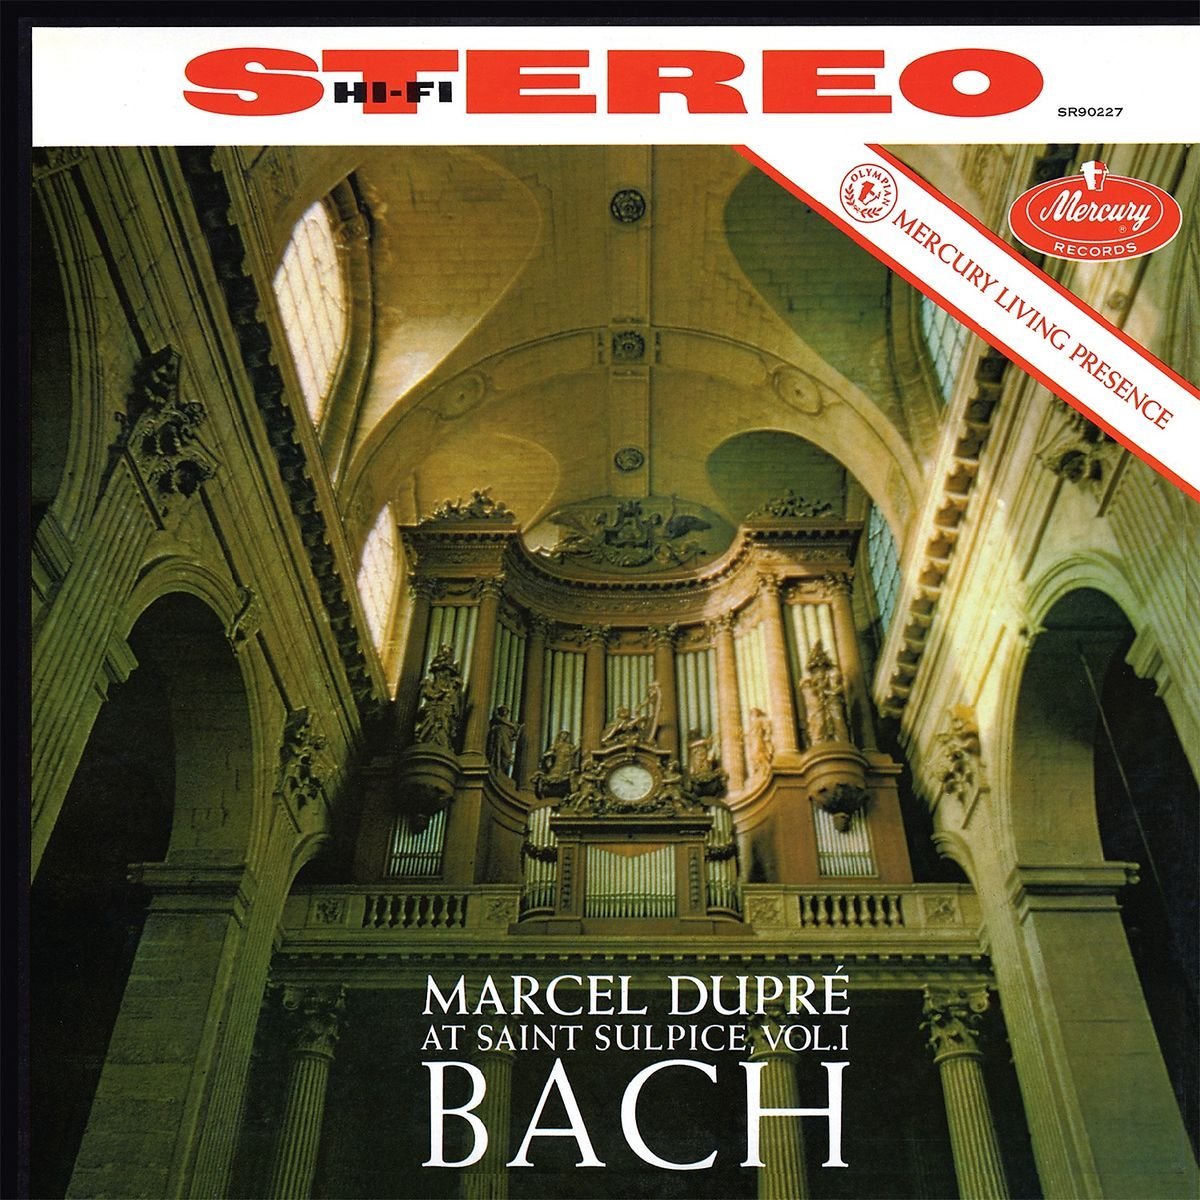 Marcel Dupre. Bach. At Saint Sulpice, Vol. I